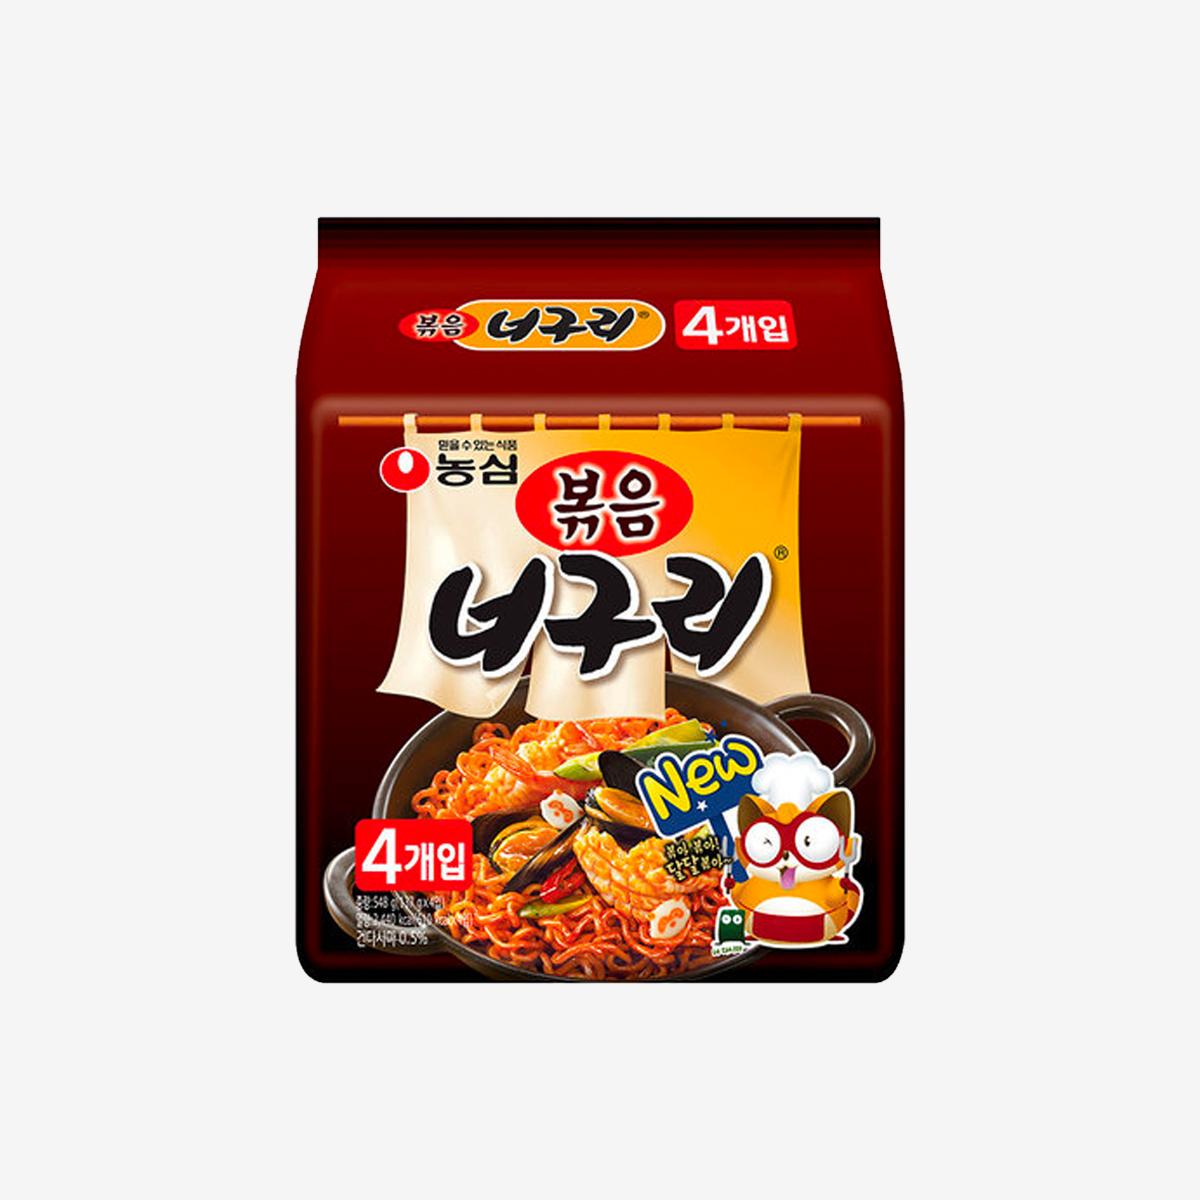 korean brand nongshim's Stir-fried Neoguri Ramen pack